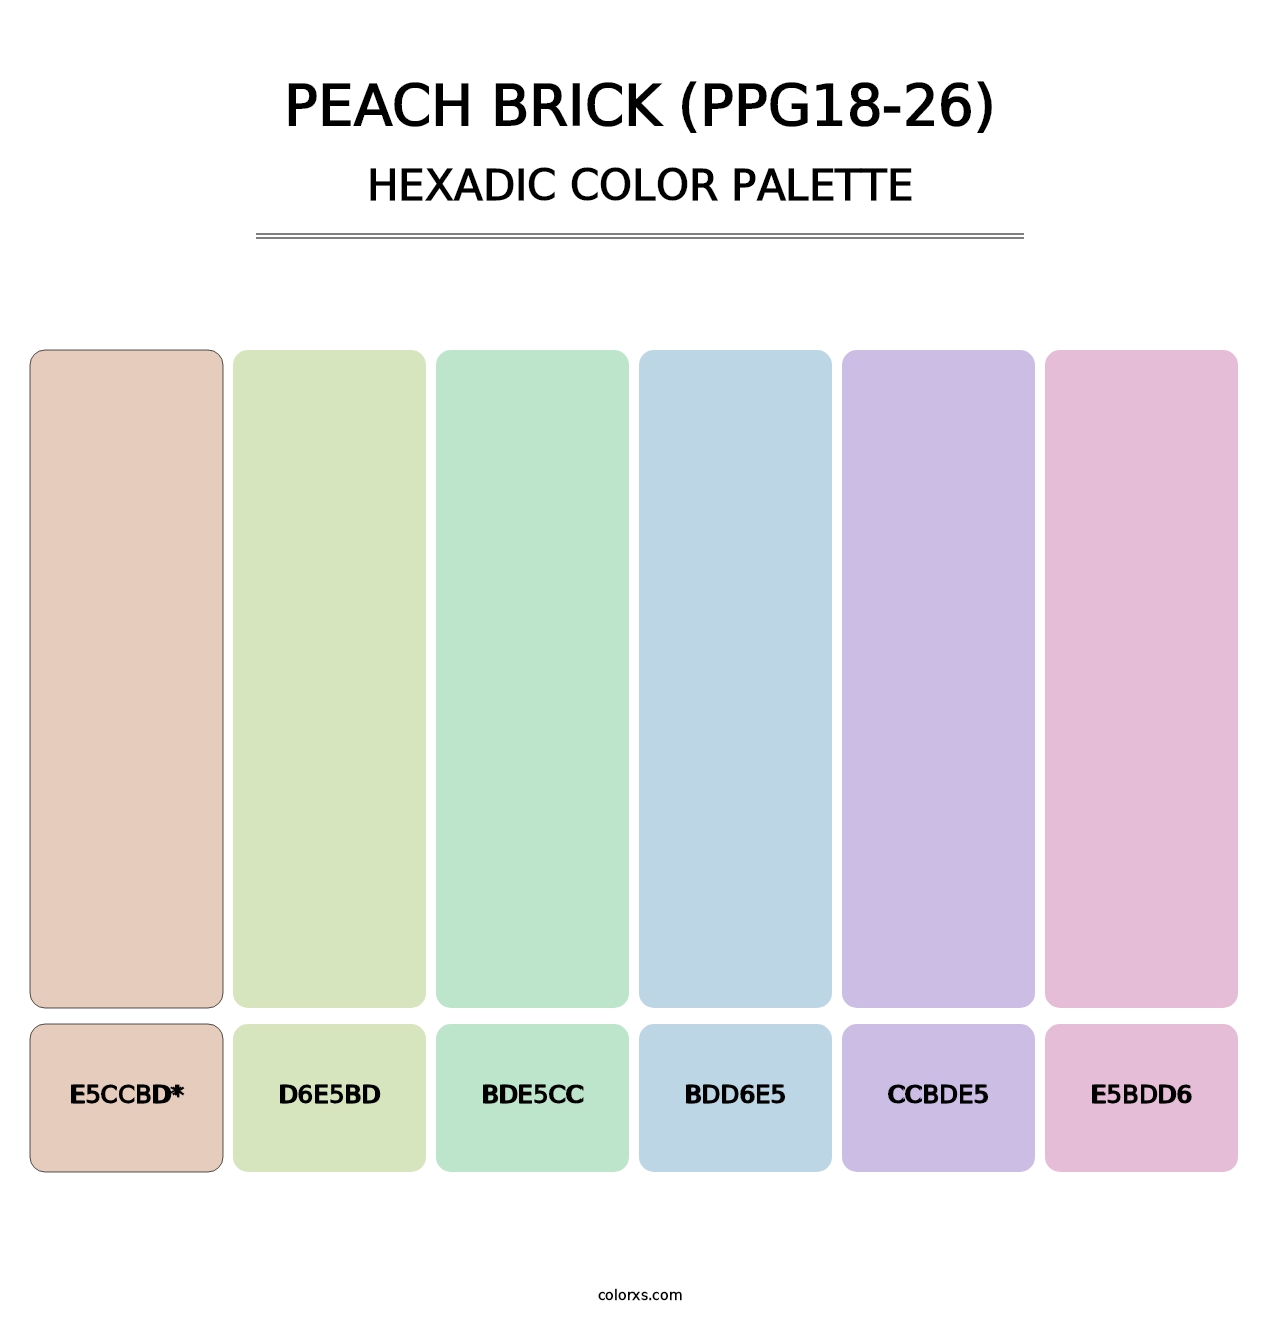 Peach Brick (PPG18-26) - Hexadic Color Palette